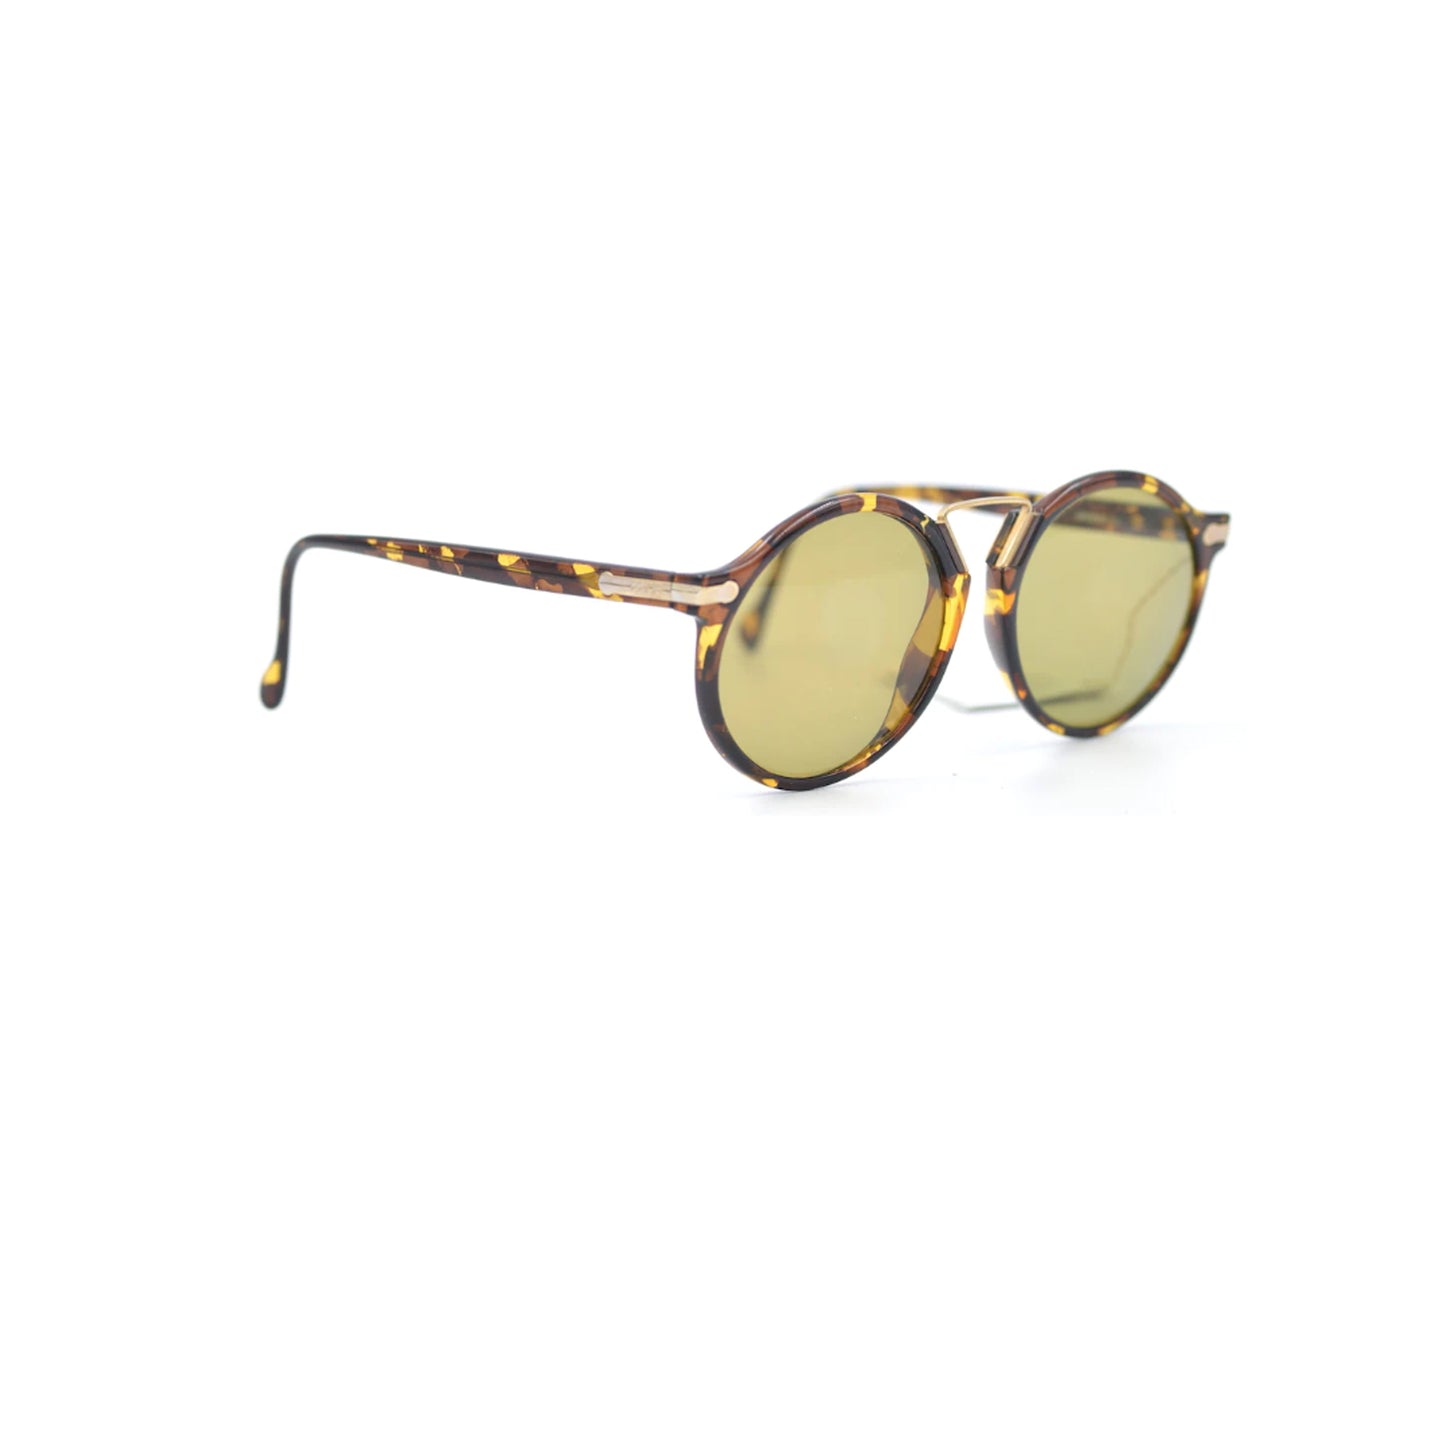 Hugo Boss by Carrera Gold Round Acetate Full Rim Sunglasses 5151